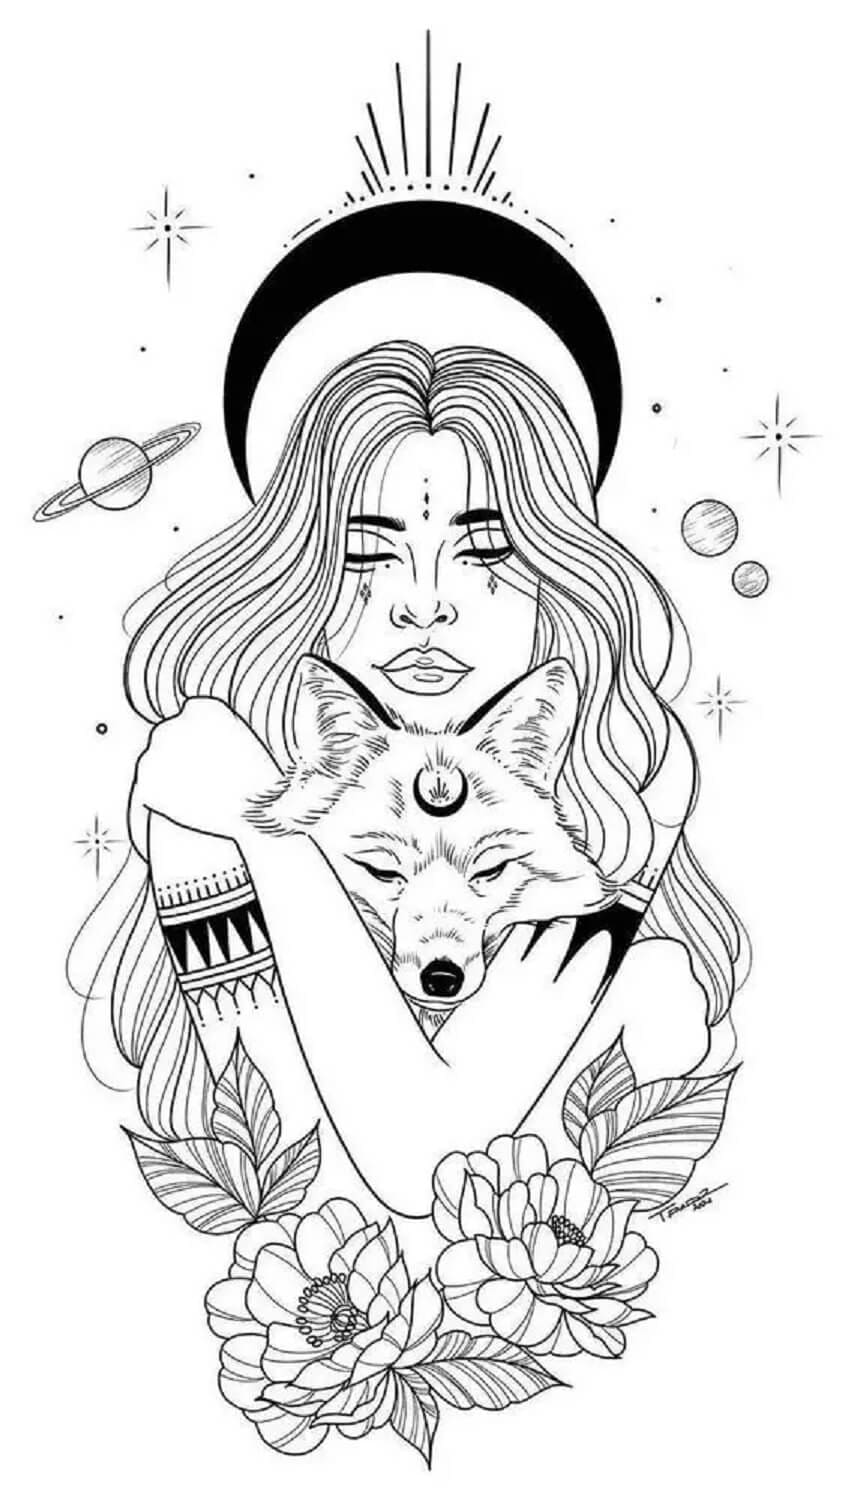 Mandala Fille et Loup coloring page